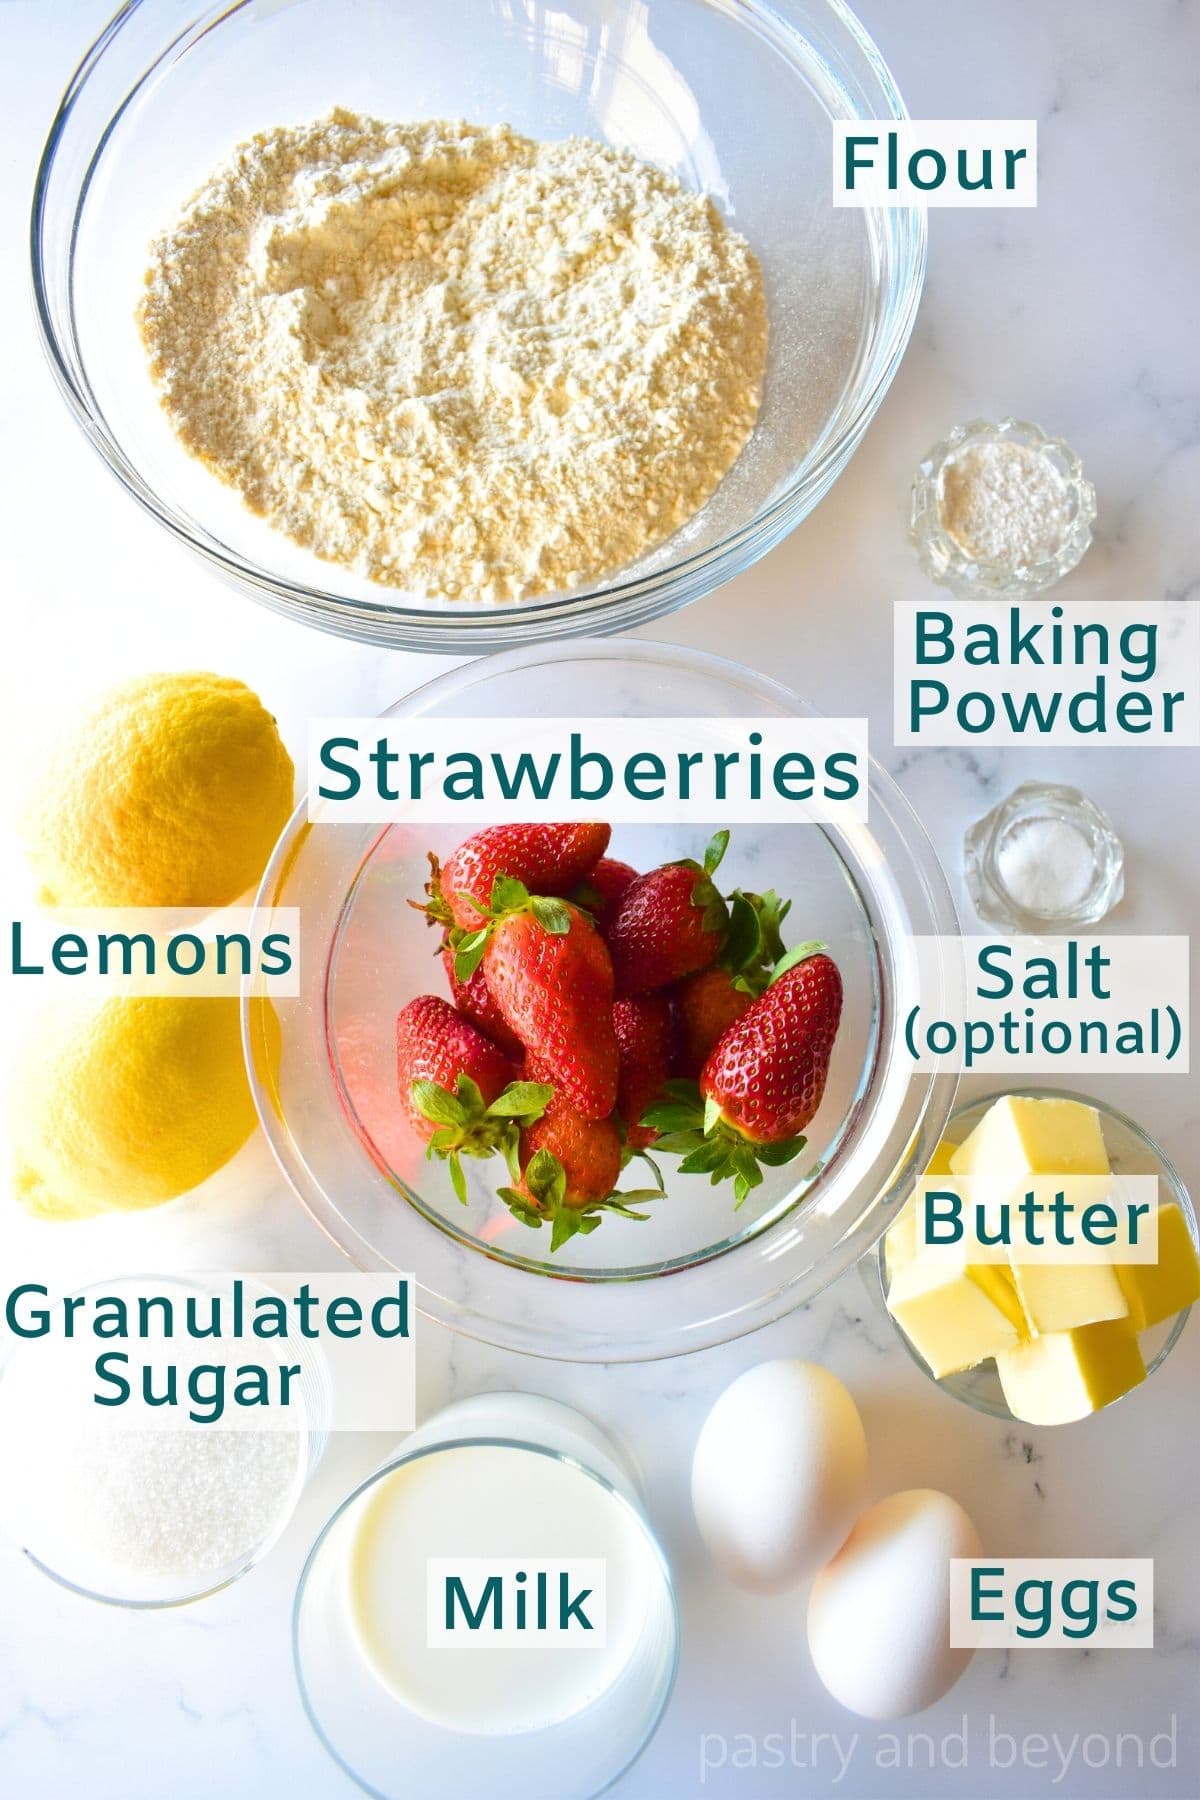 Ingredients to make strawberry lemon muffins.